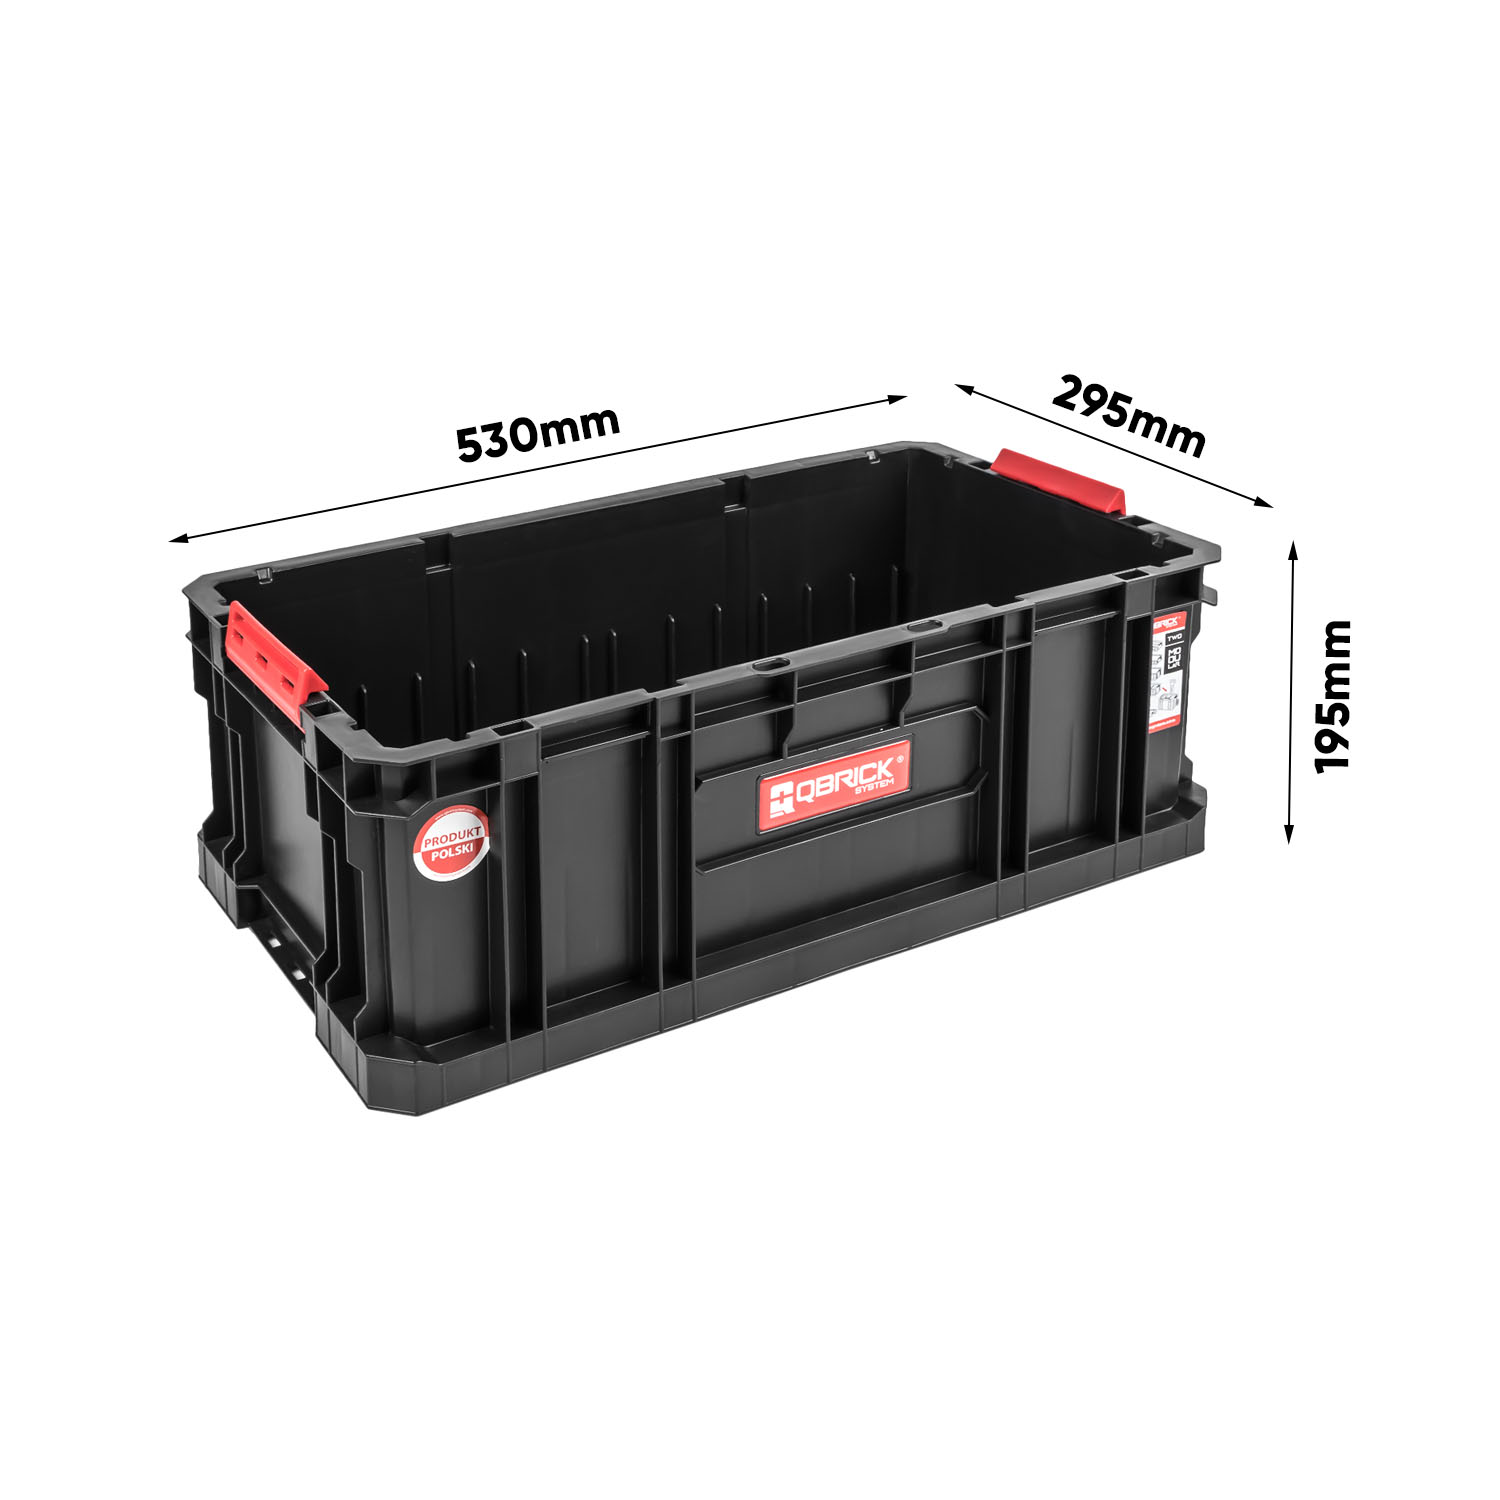 Wymiary Werkstattcontainer QS Two Box 200 (1)